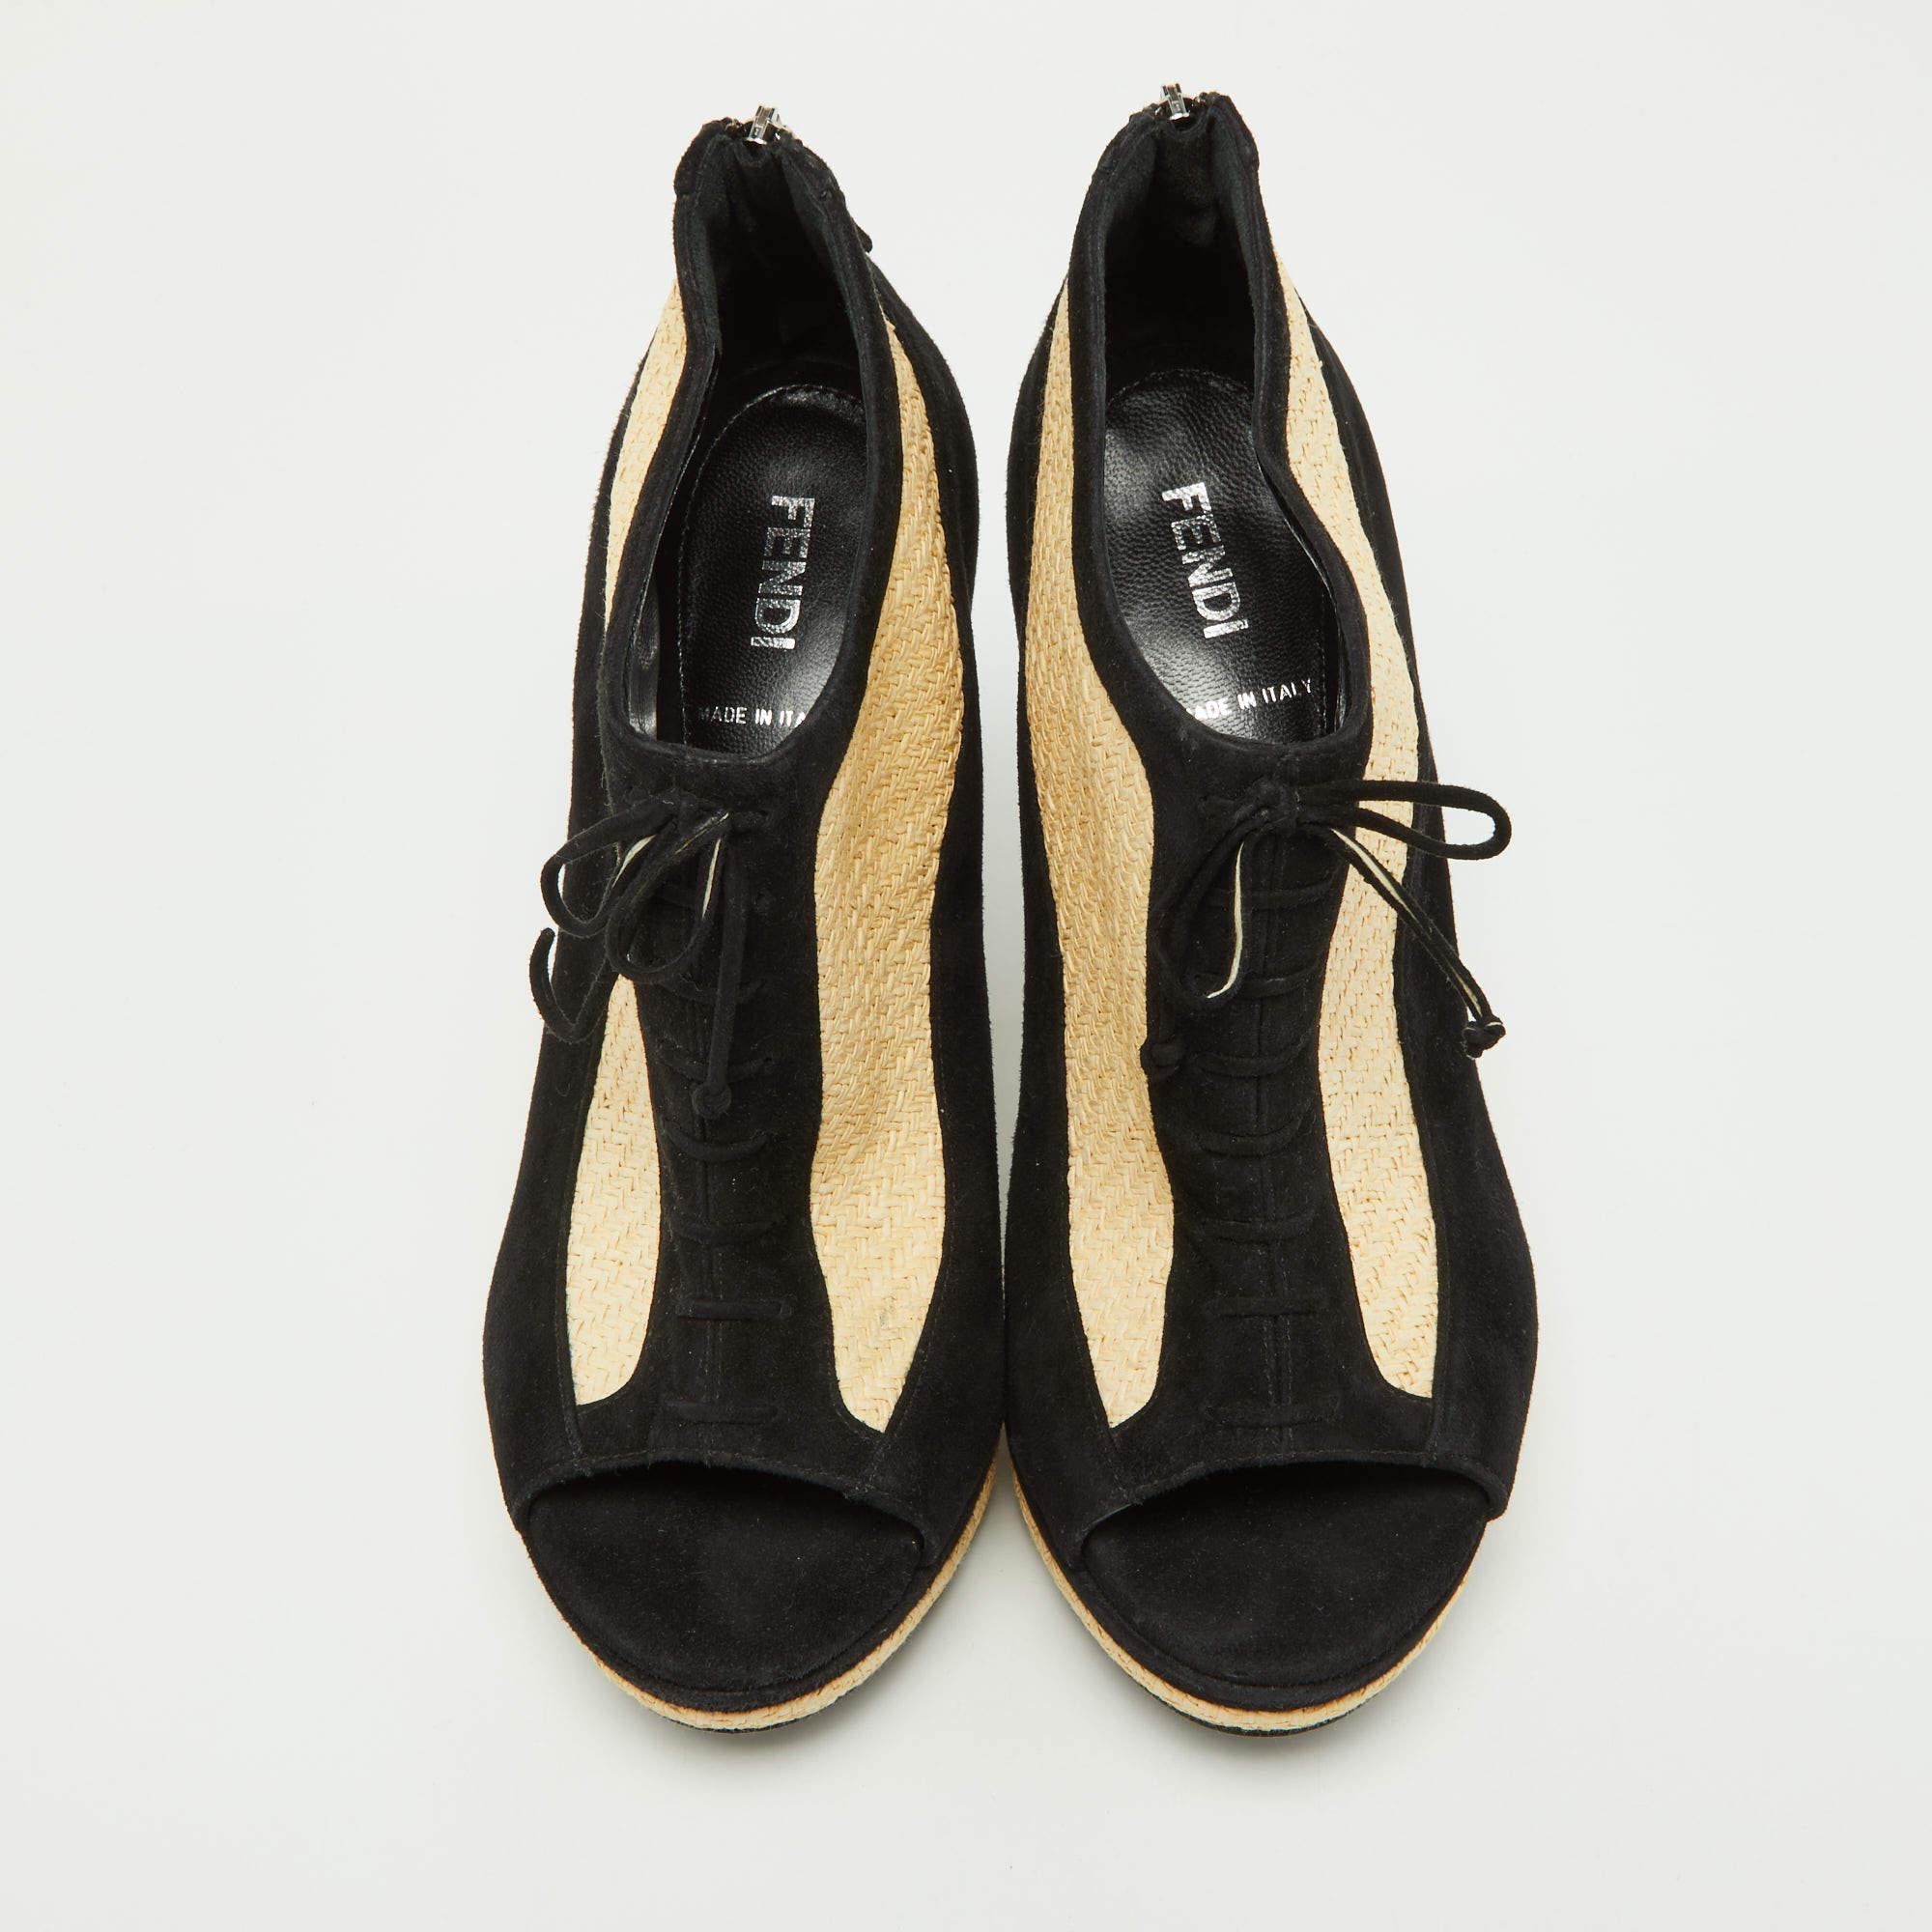 Fendi Black/Beige Suede and Raffia Wedge Peep Toe Booties Size 37 For Sale 1